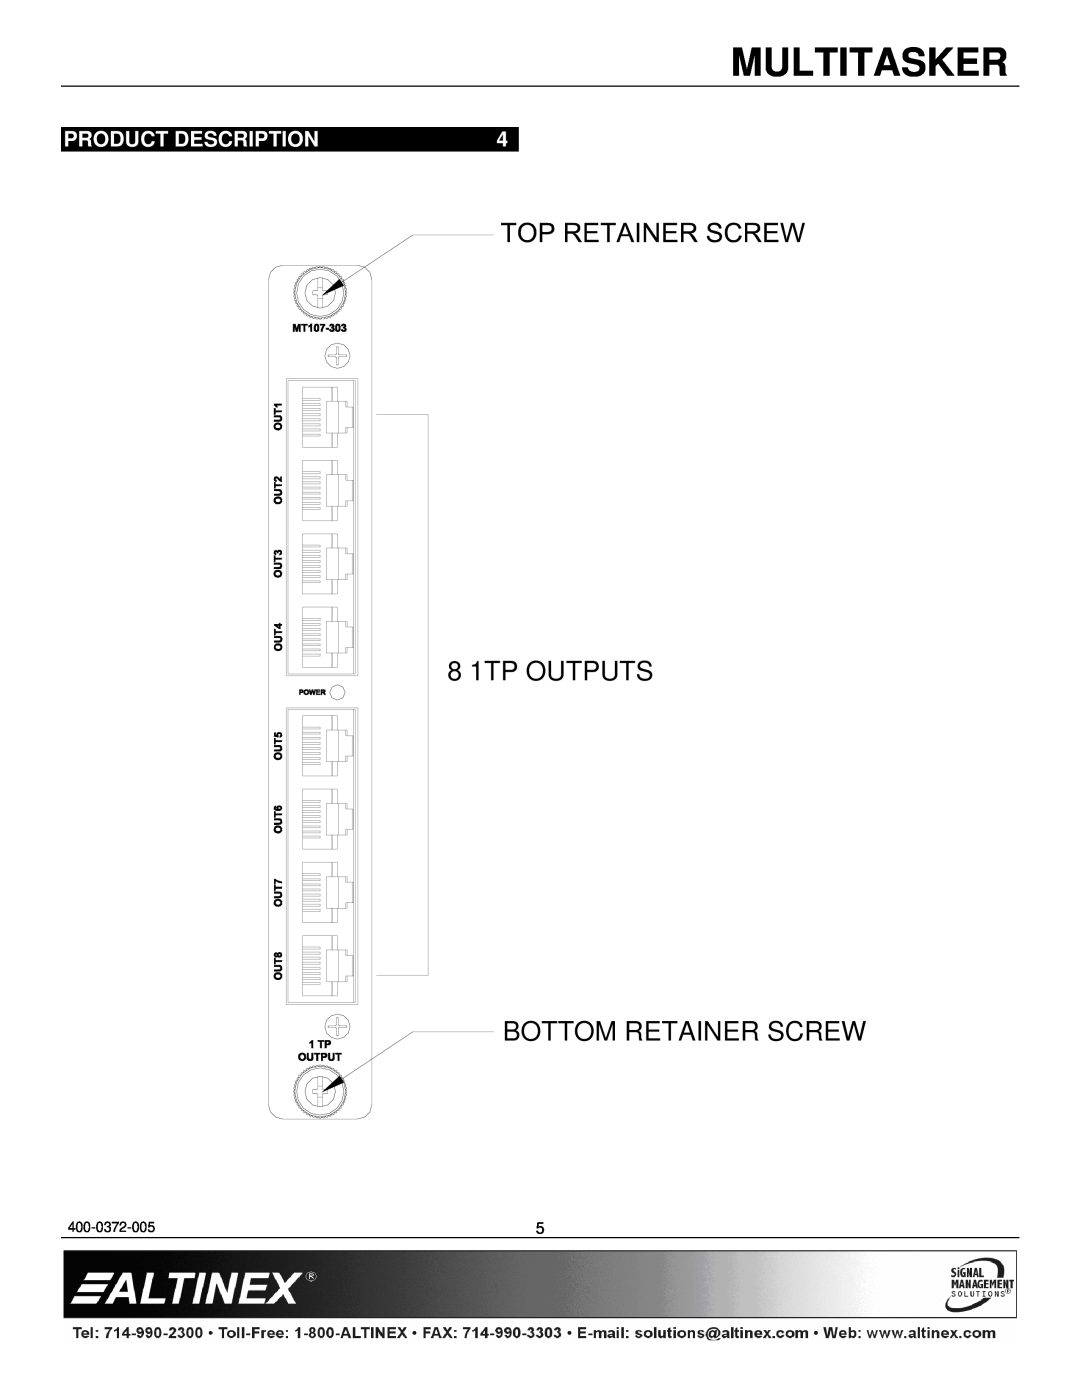 Altinex MT107-303 manual Product Description, Multitasker, 8 1TP OUTPUTS BOTTOM RETAINER SCREW, 400-0372-005 